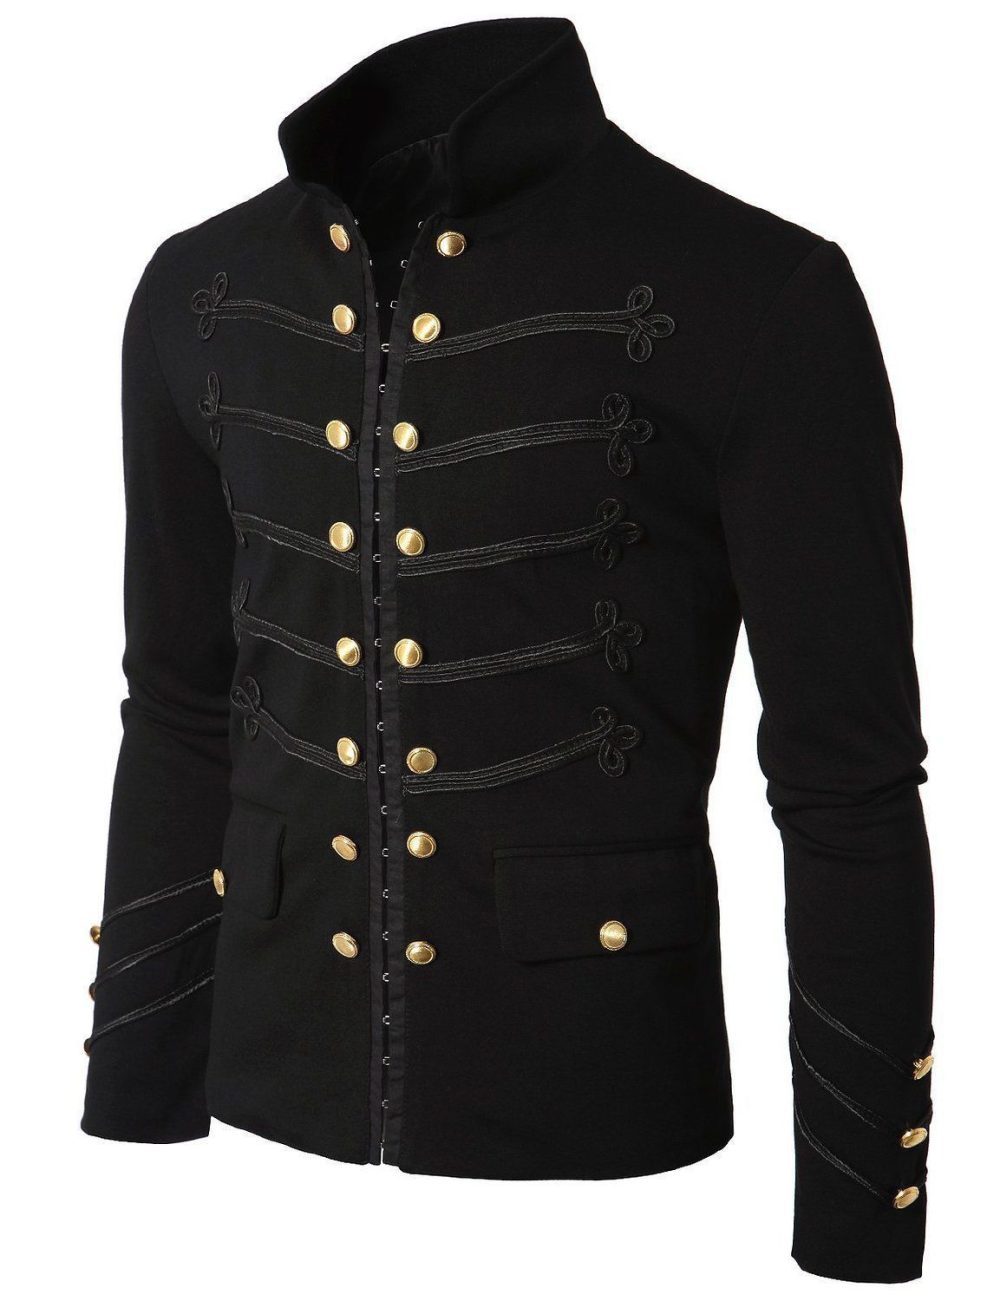 mens military jacket